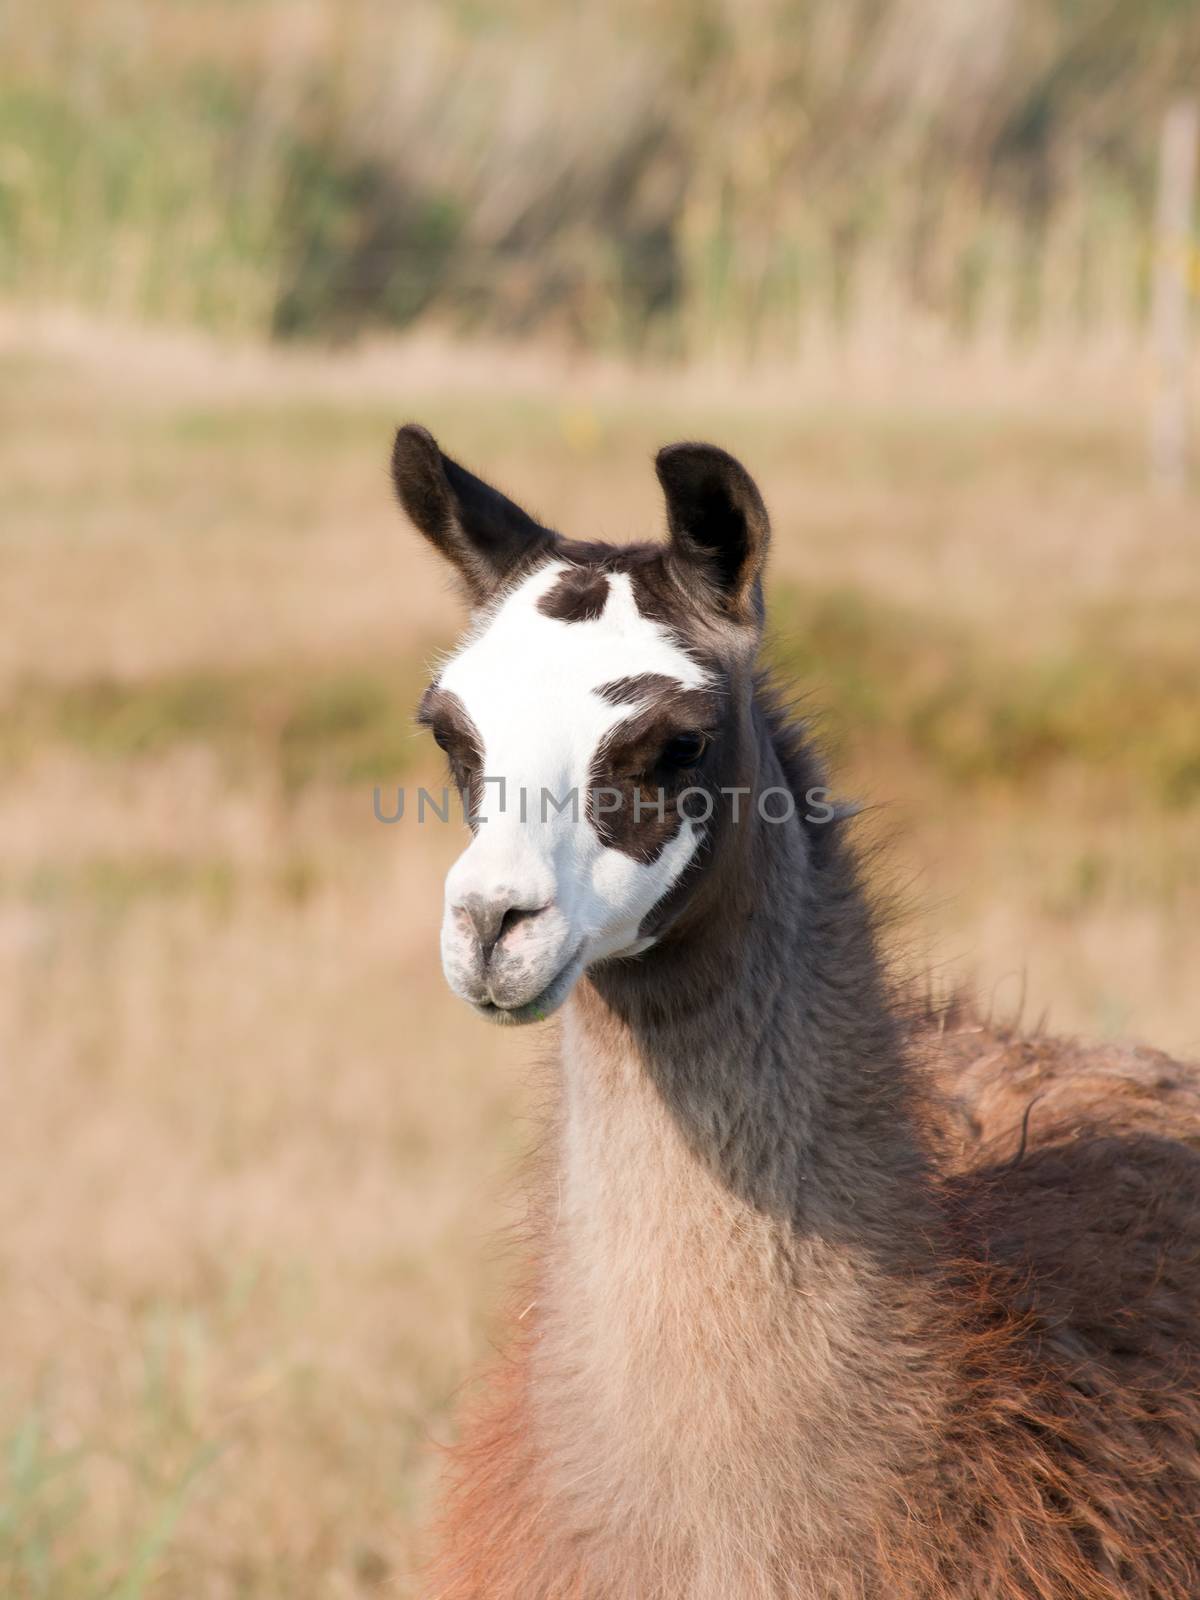 The llama (Lama glama) in a pasture.